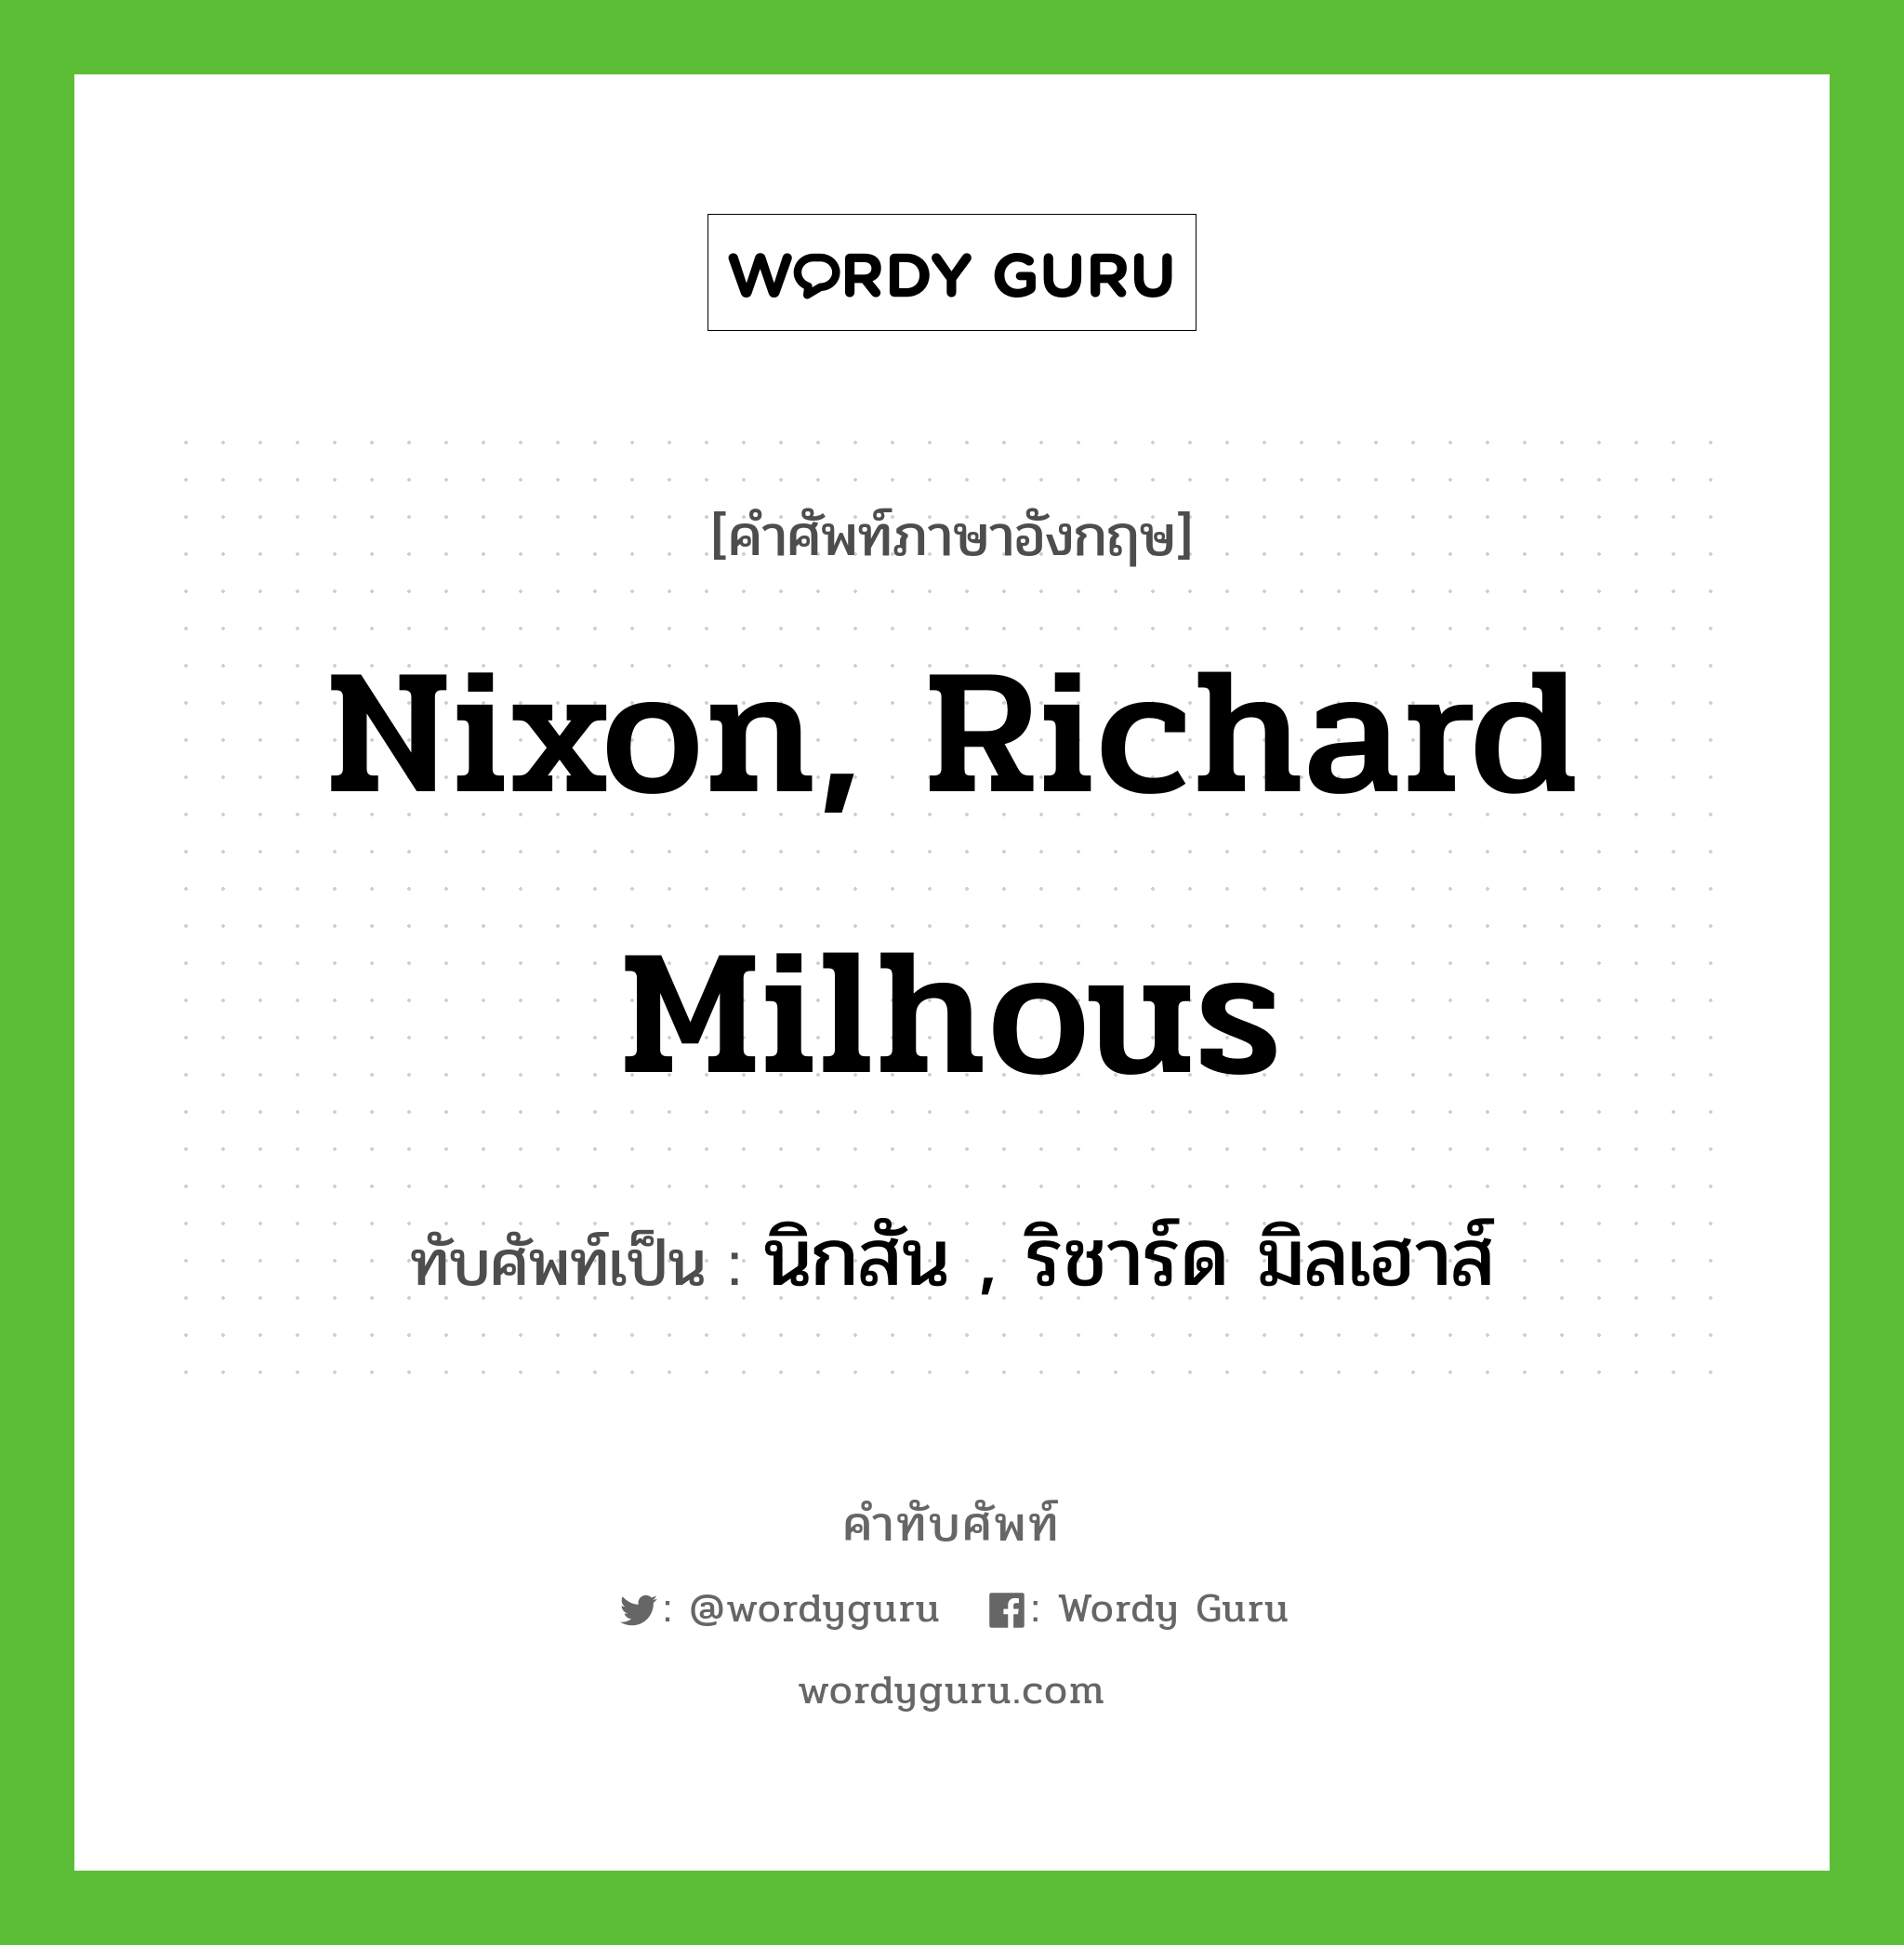 Nixon, Richard Milhous เขียนเป็นคำไทยว่าอะไร?, คำศัพท์ภาษาอังกฤษ Nixon, Richard Milhous ทับศัพท์เป็น นิกสัน , ริชาร์ด มิลเฮาส์